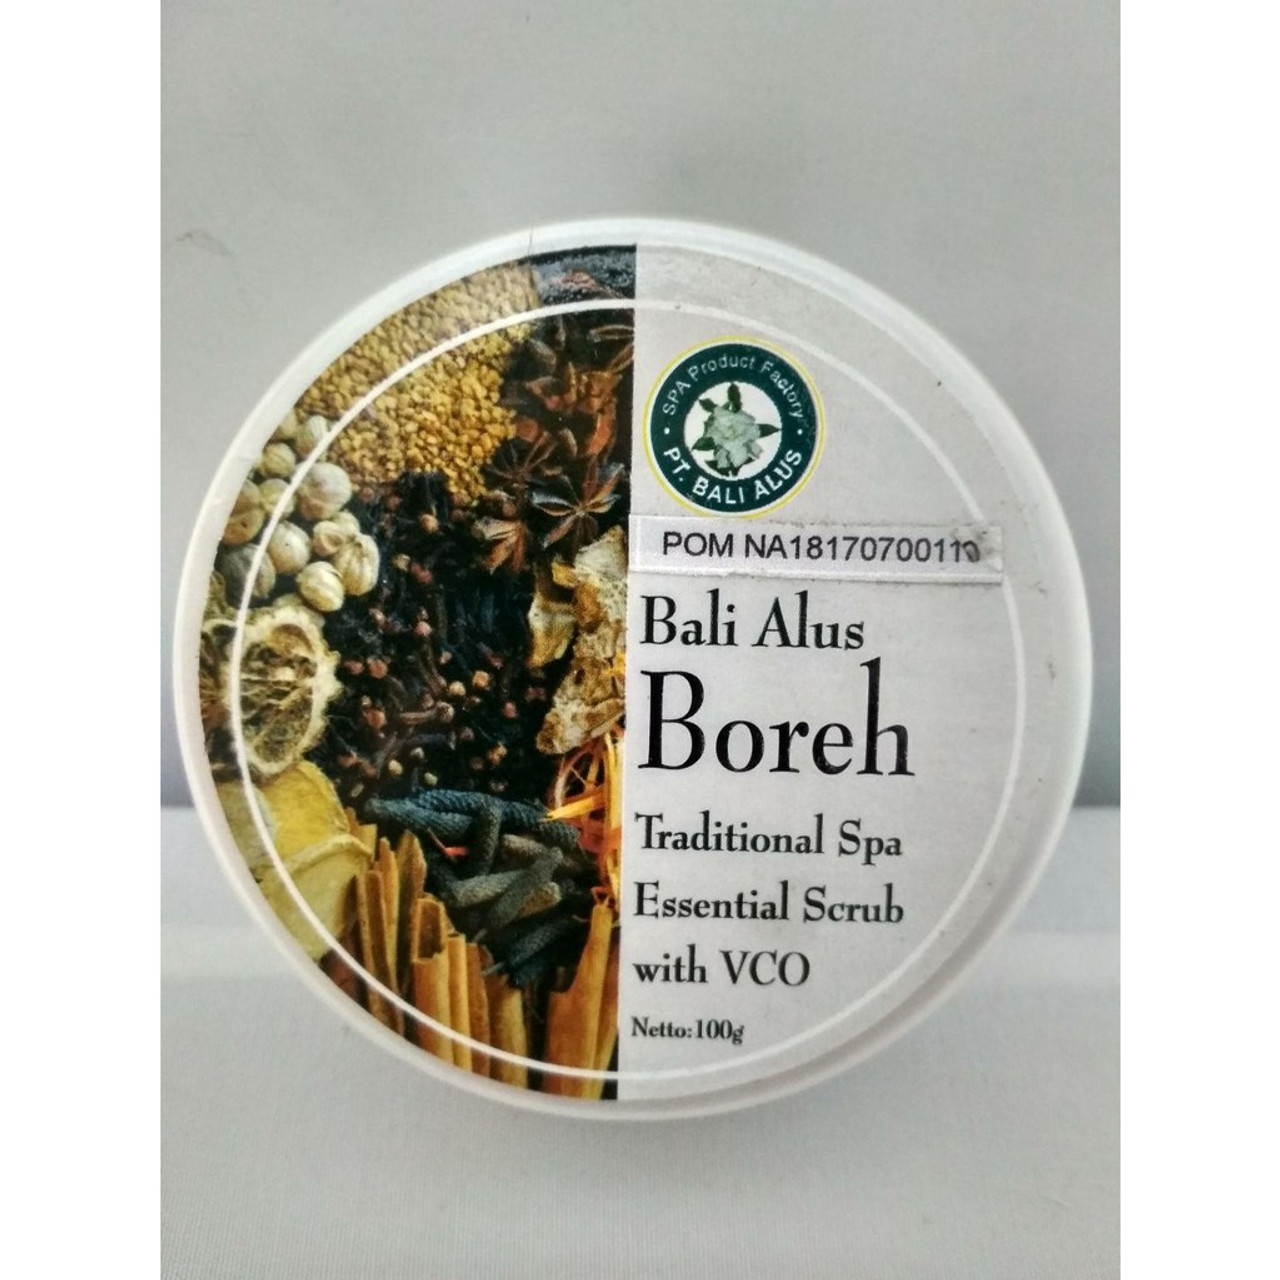 BALI ALUS Lulur Cream Scrub Boreh, 100gr